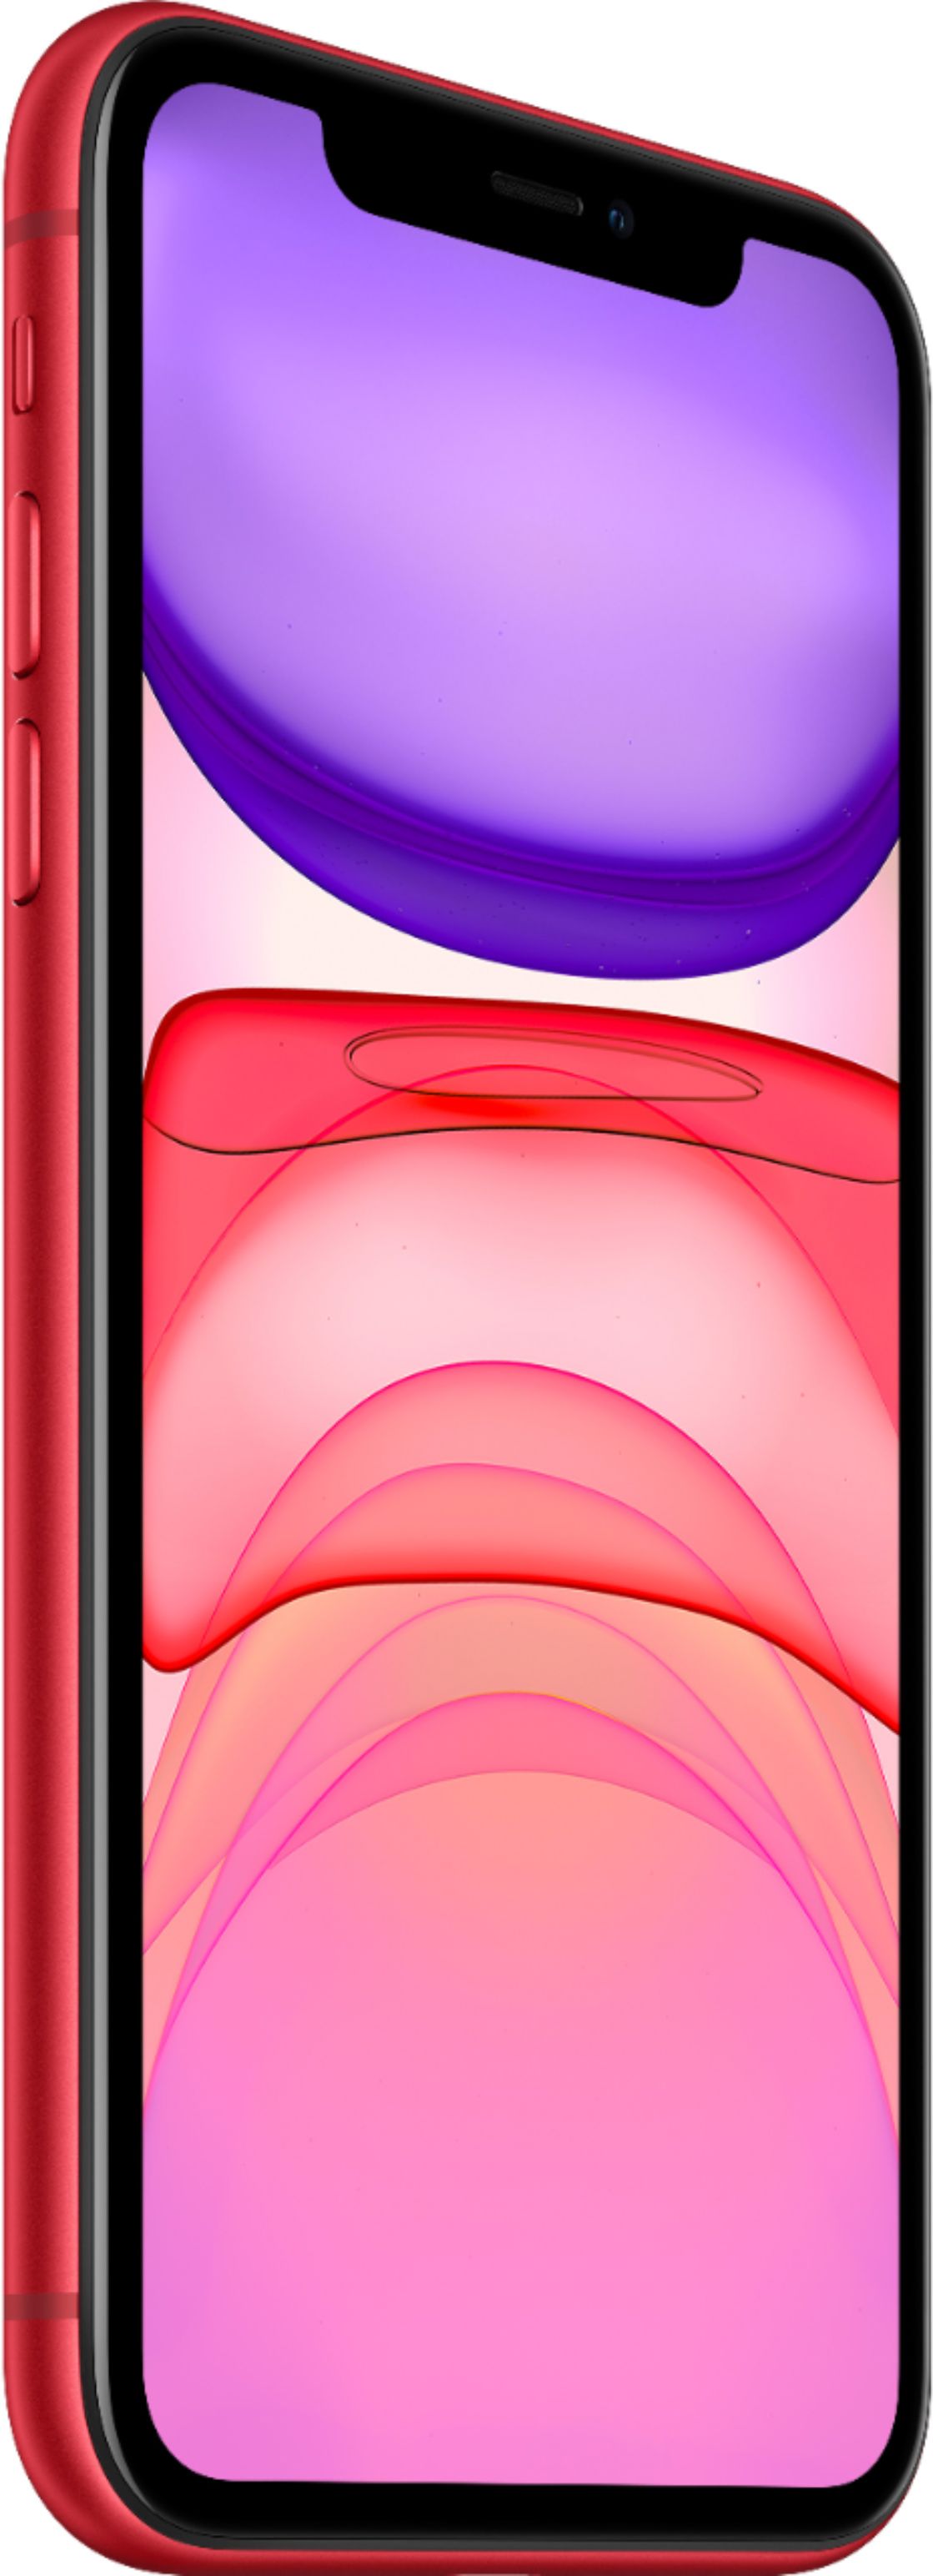 Apple iPhone 12, 64GB, (Product)Red - (Generalüberholt) 